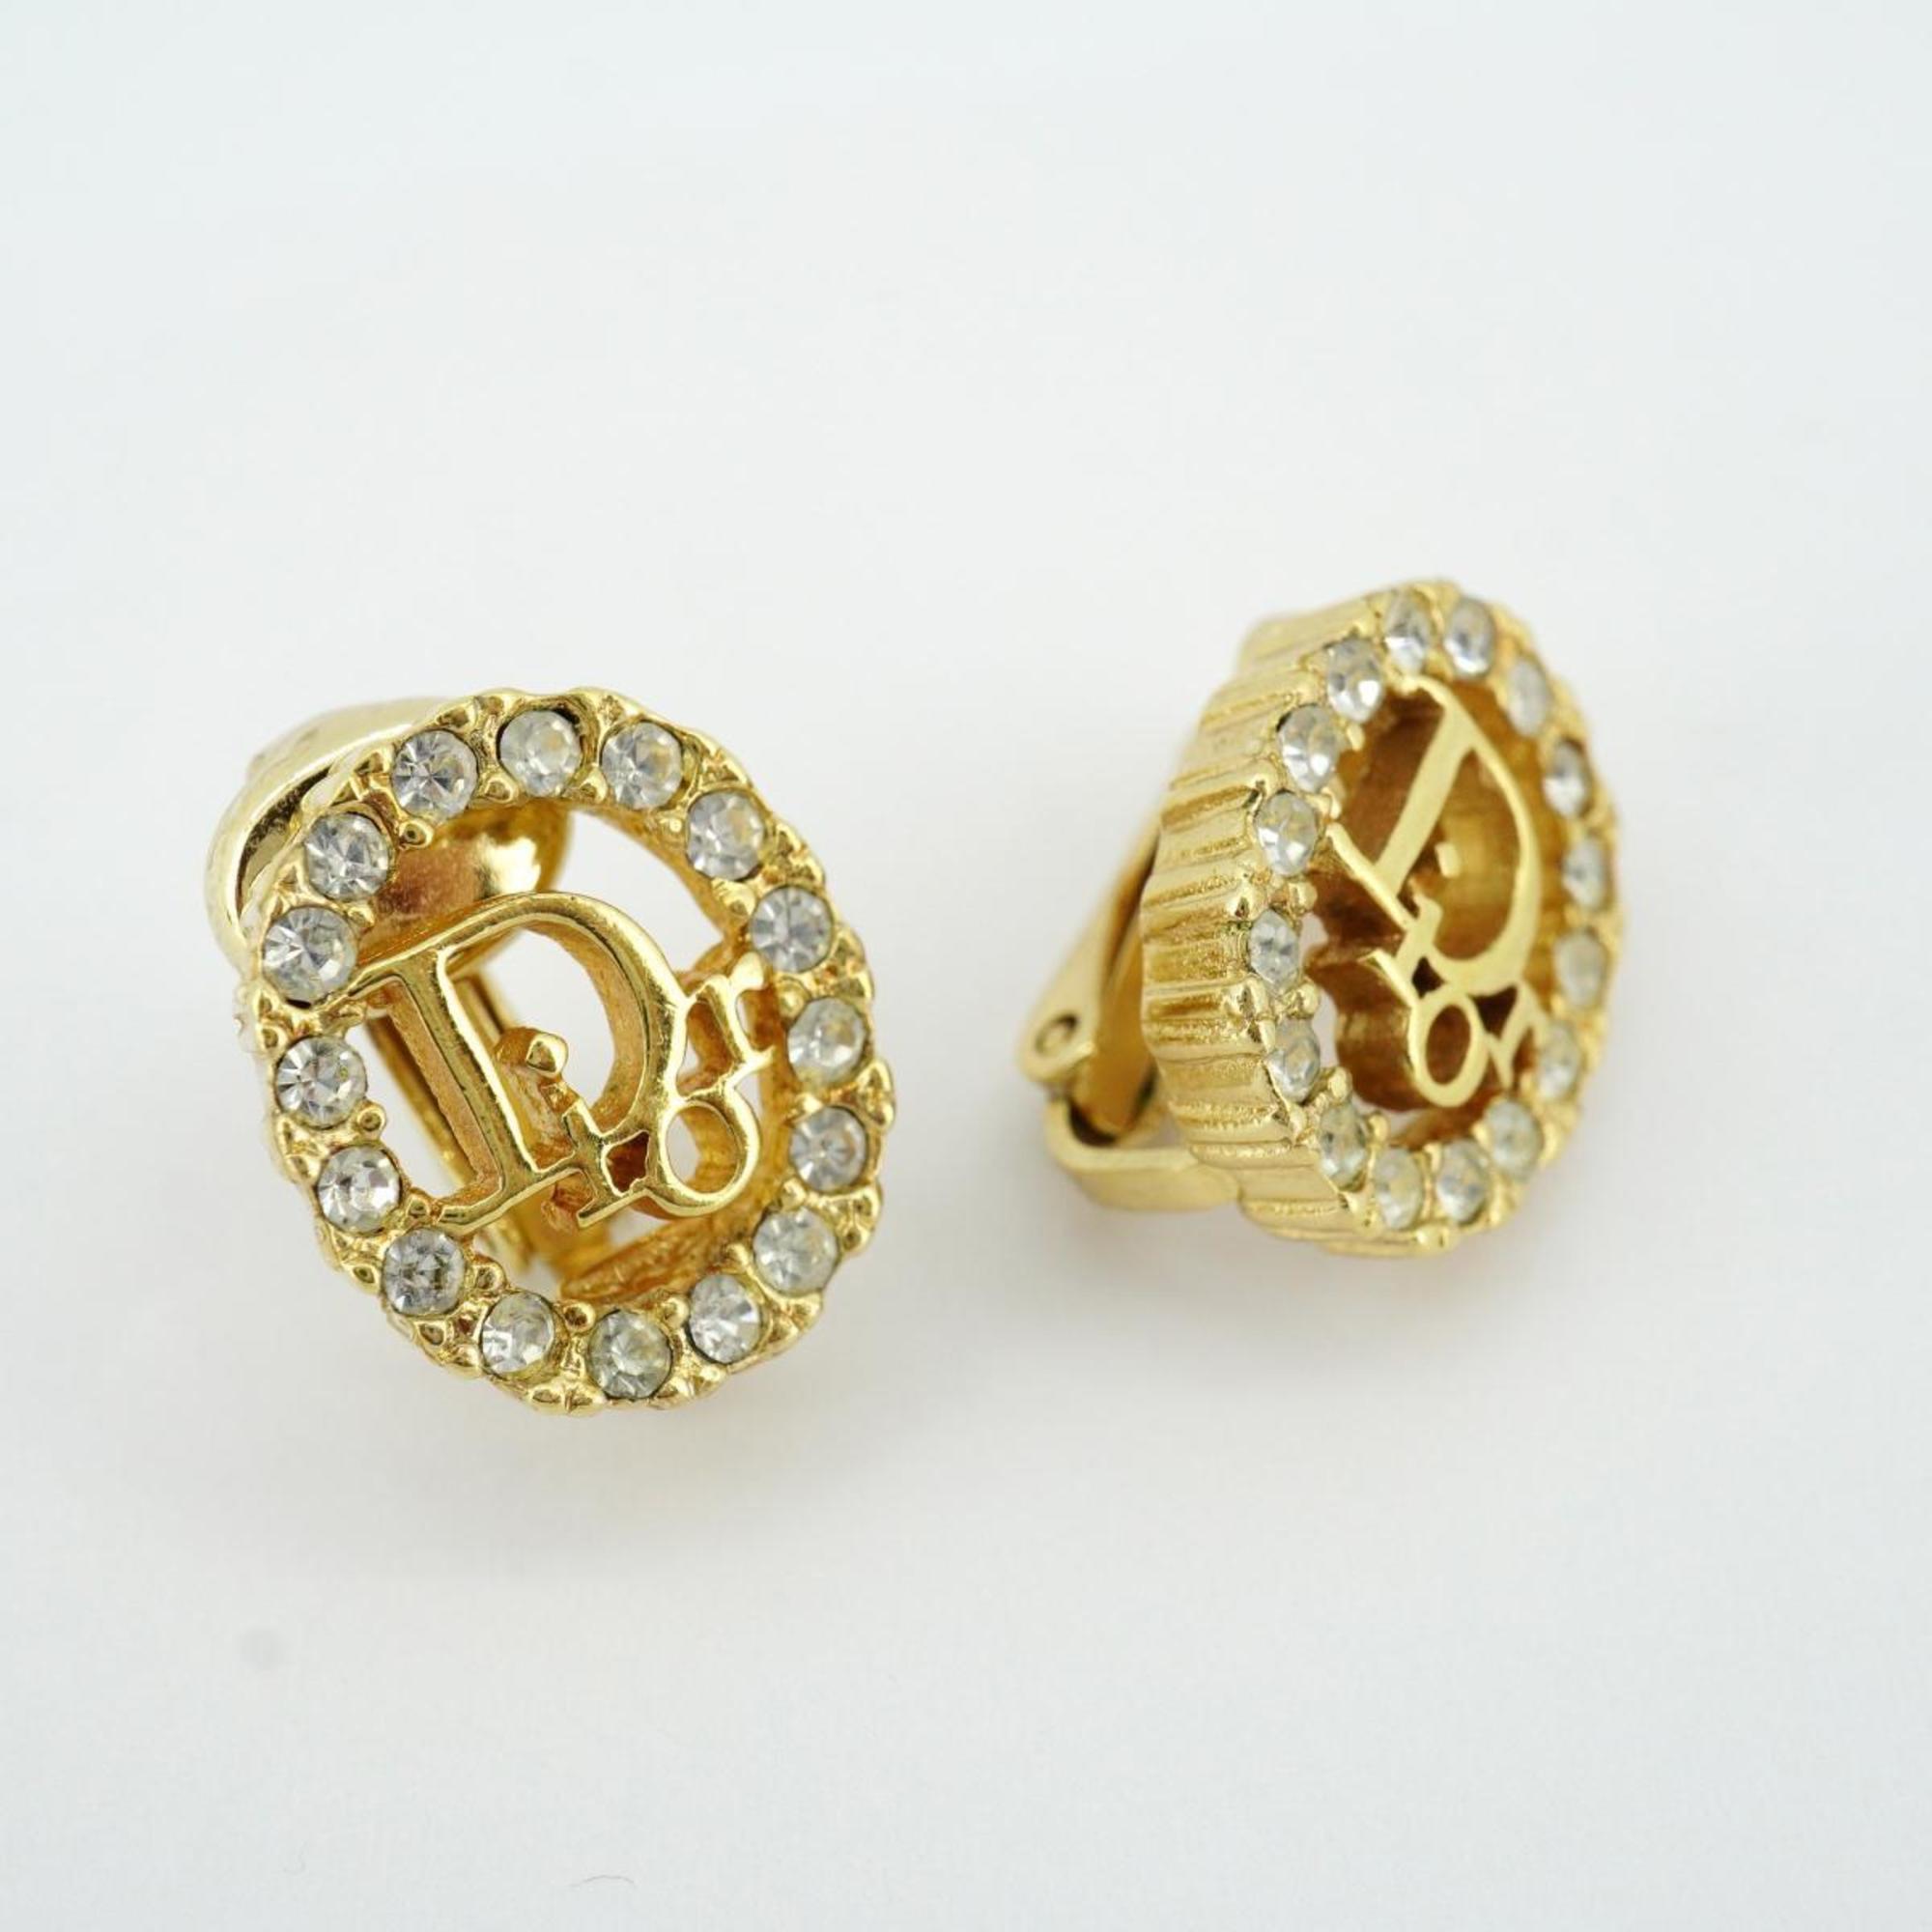 Christian Dior Earrings Oval Rhinestone GP Plated Gold Women's